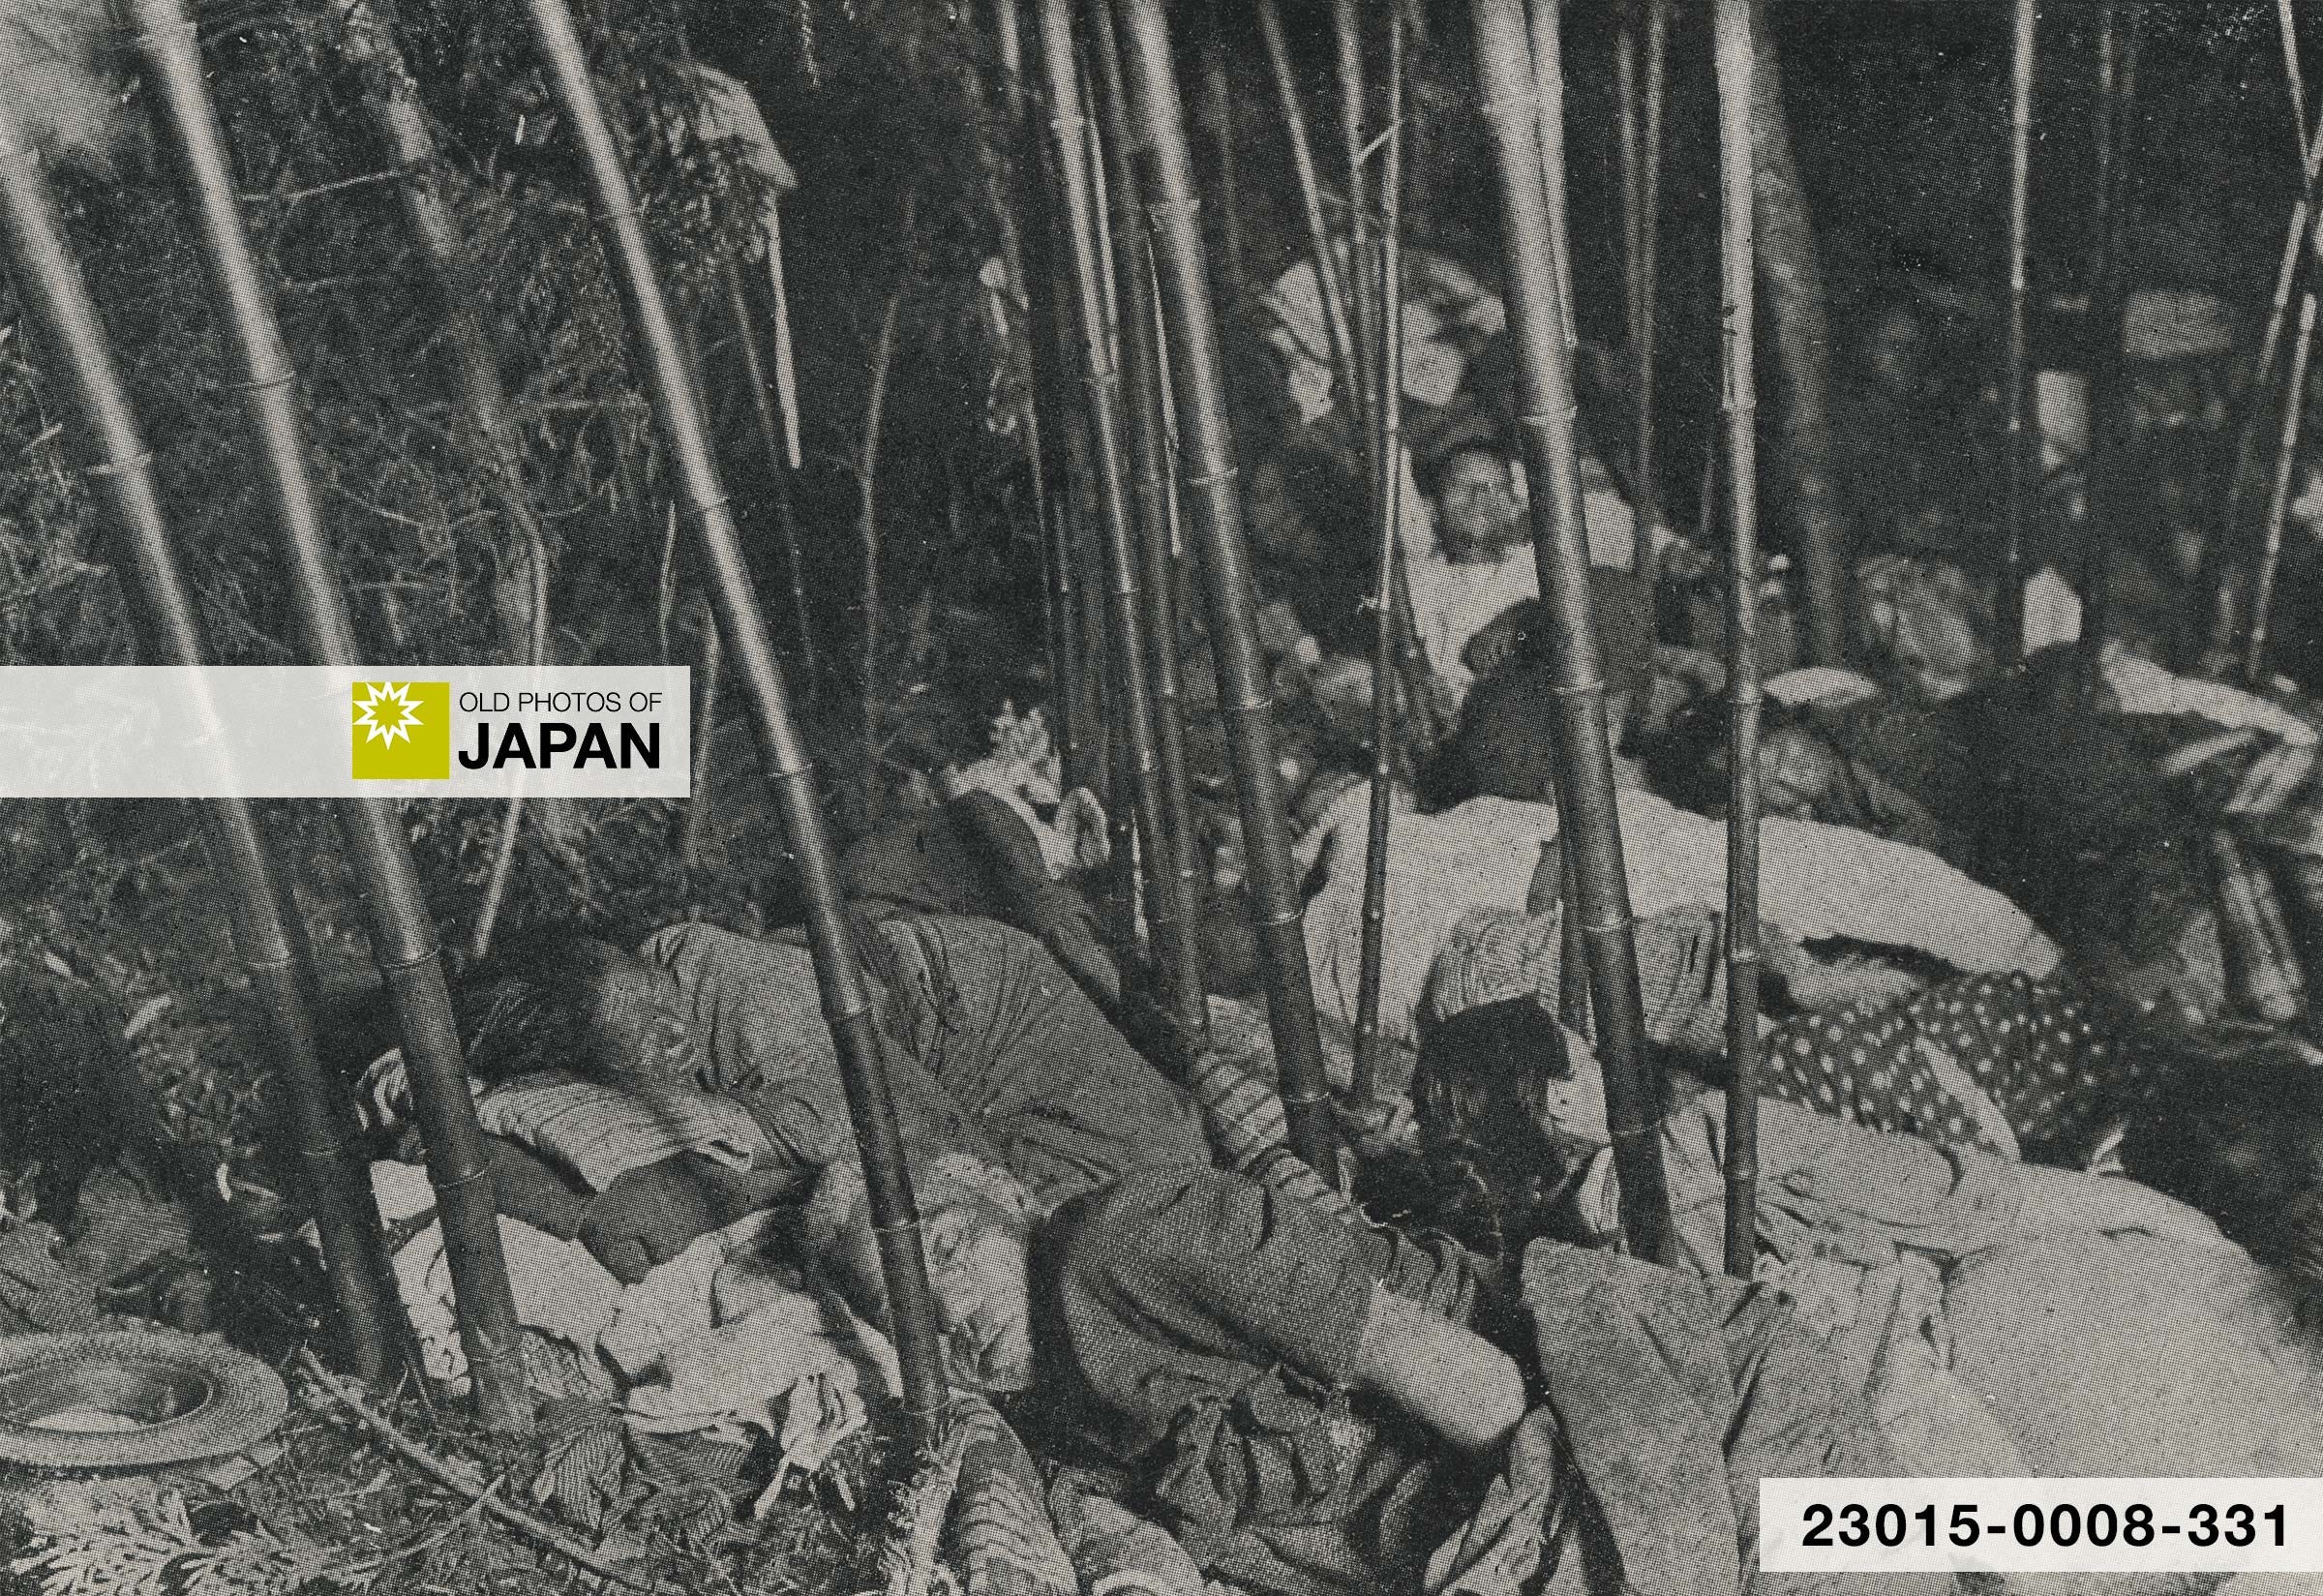 Displaced people sleeping in a bamboo forest near Oyama, Shizuoka Prefecture, 1923